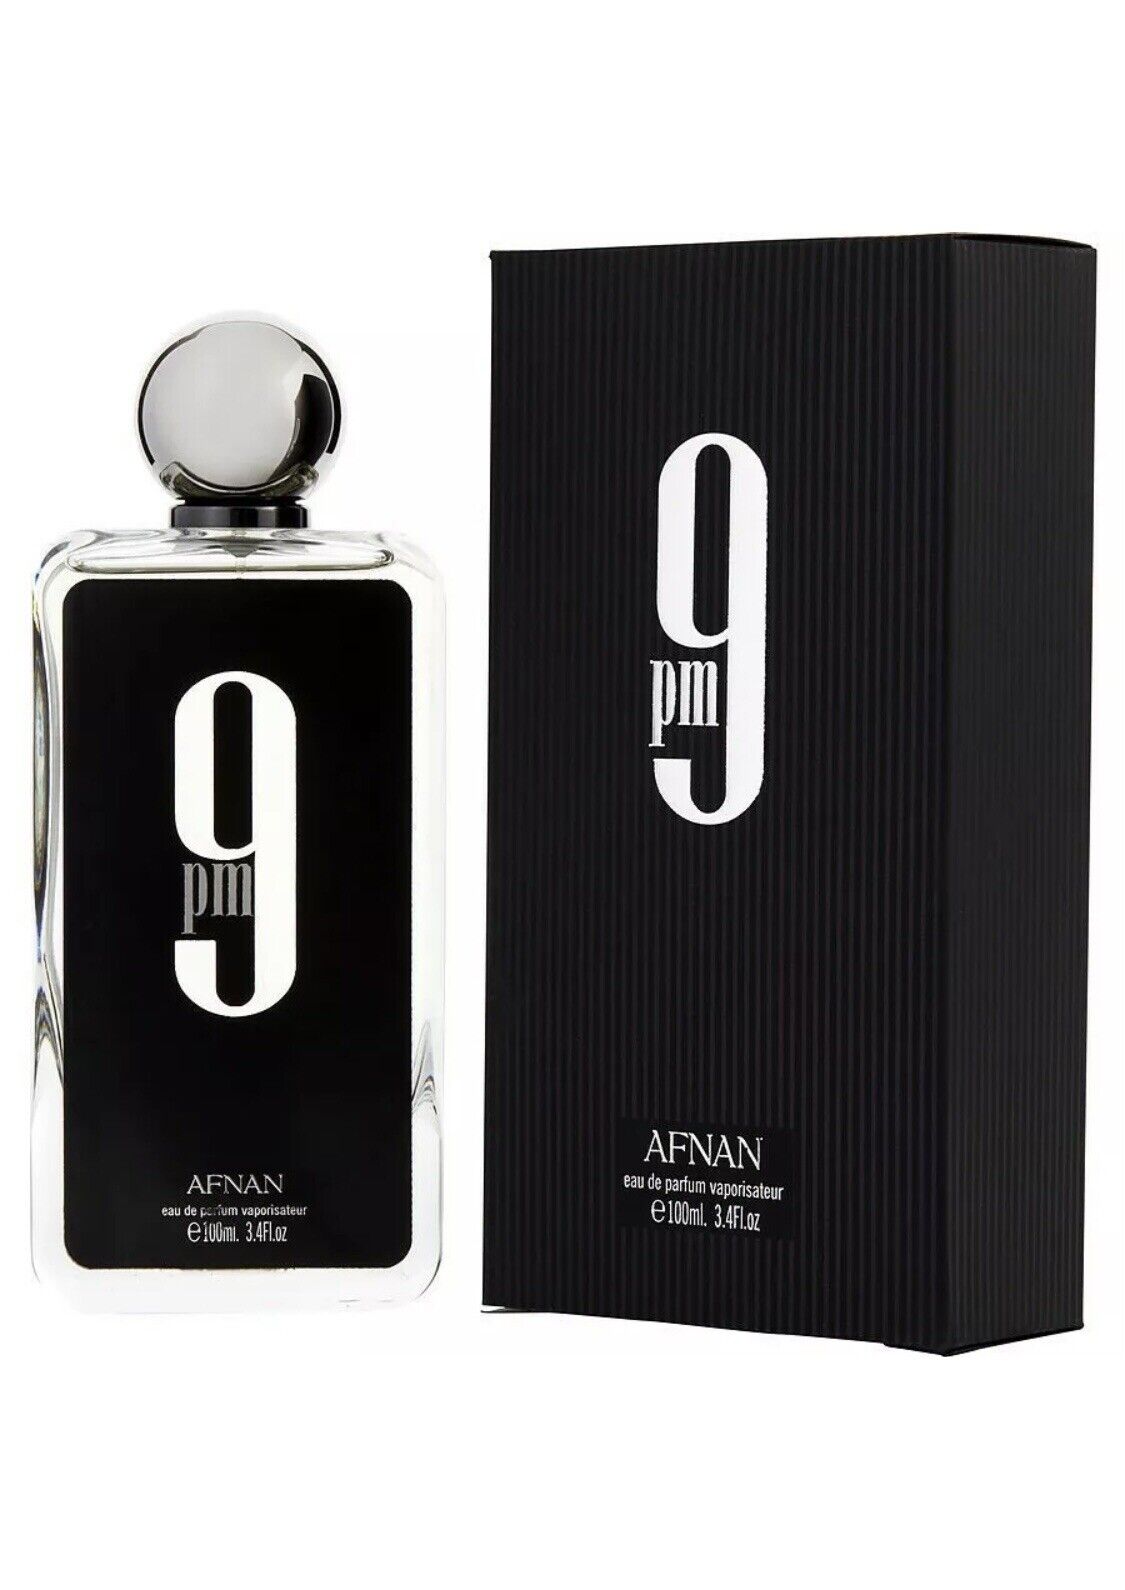 AFNAN 9 PM long lasting Eau de Perfume (100ml) for men women halal fragrance